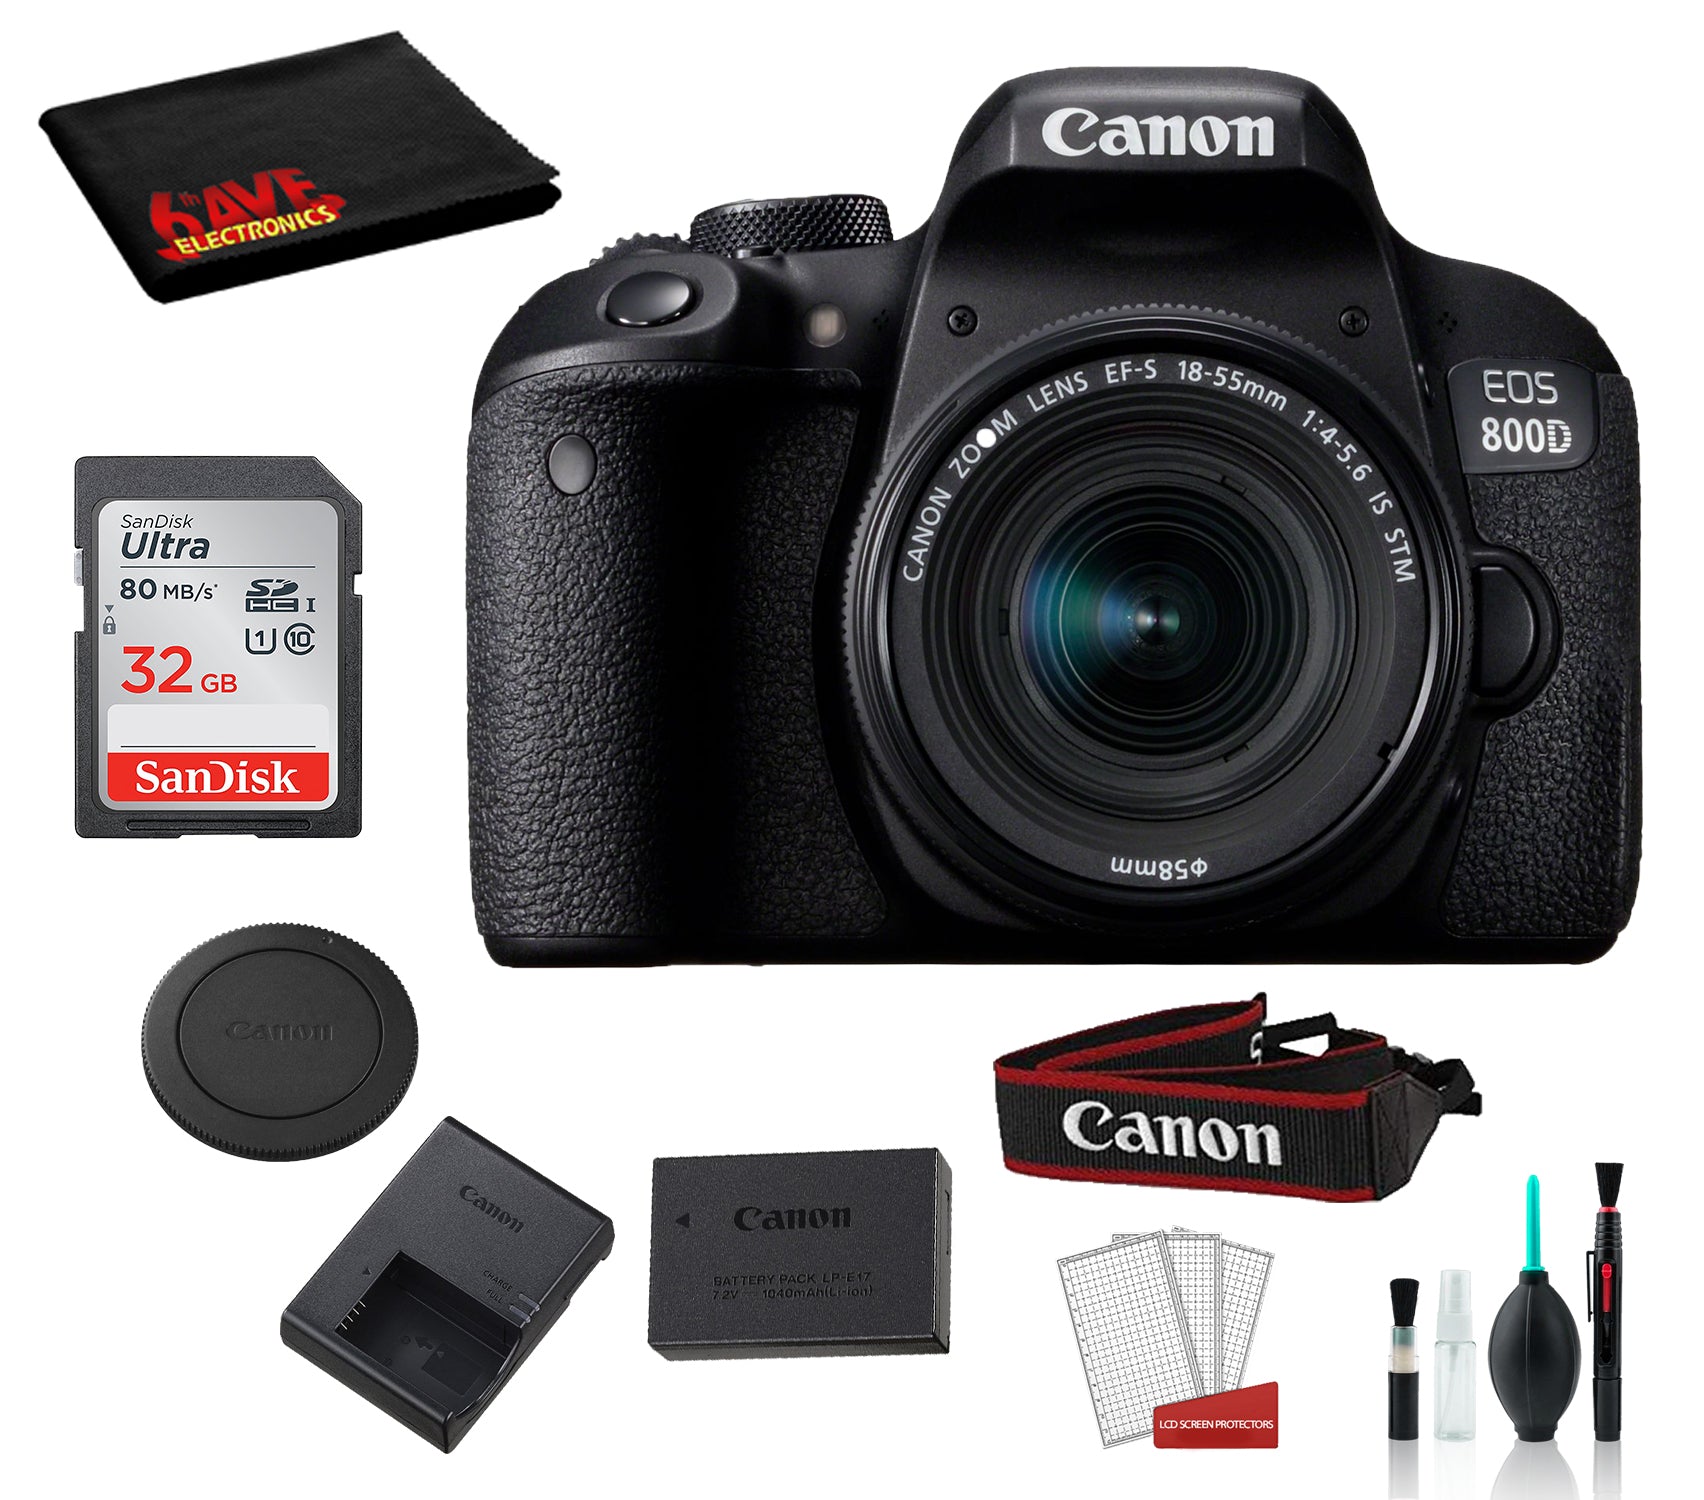 Canon EOS 800D (Rebel T7i) 18-55mm IS STM Lens Bundle SanDisk 32gb SD Card + Cleaning Kit + MORE - International